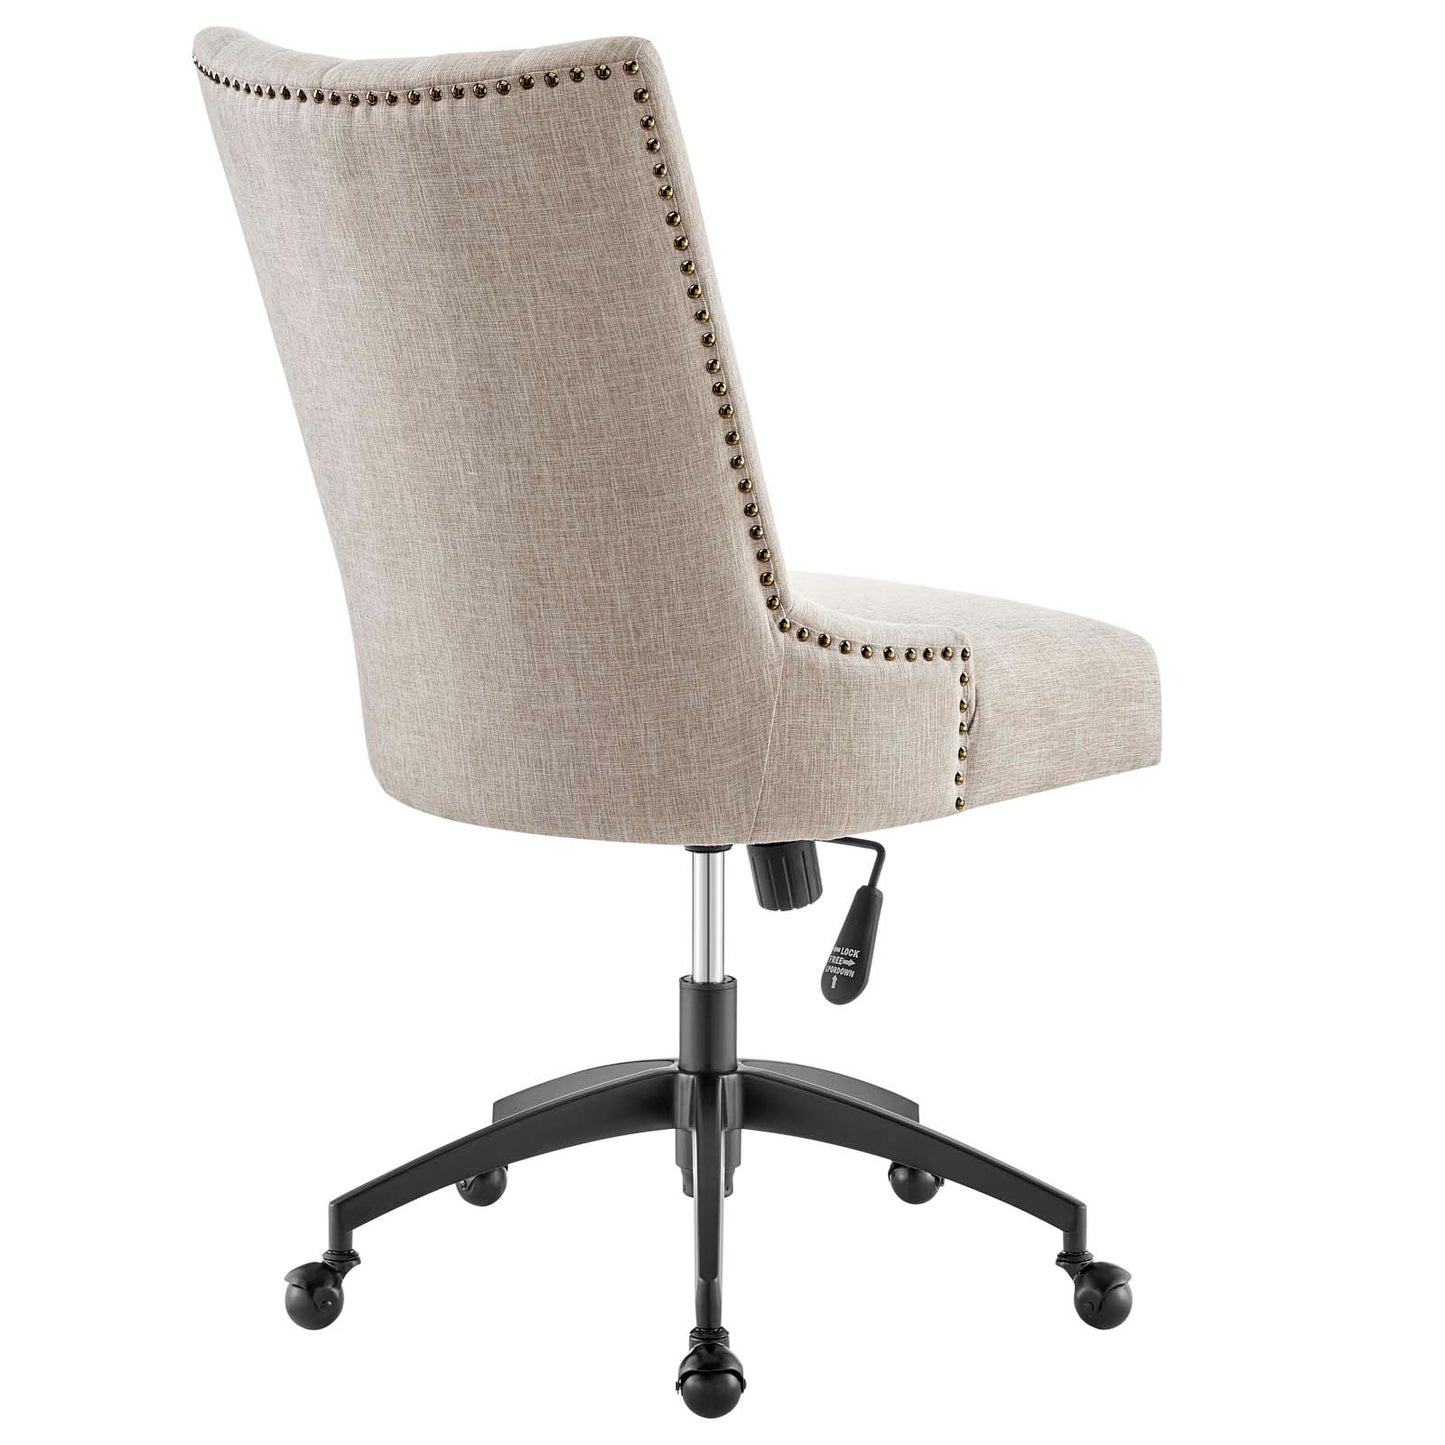 Empower Channel Tufted Fabric Office Chair Black Beige EEI-4576-BLK-BEI